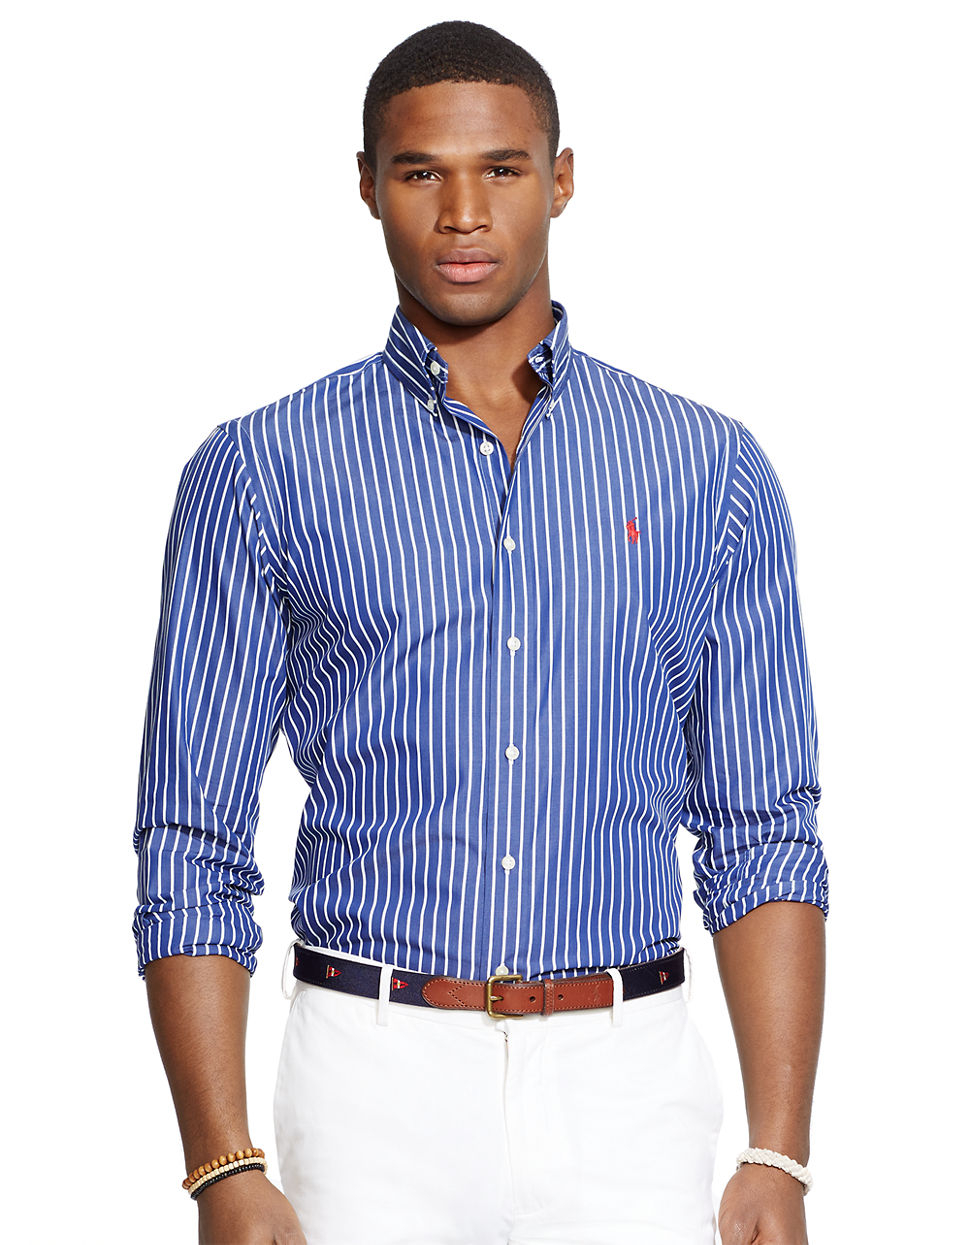 Lyst - Polo ralph lauren Striped Poplin Shirt in Blue for Men